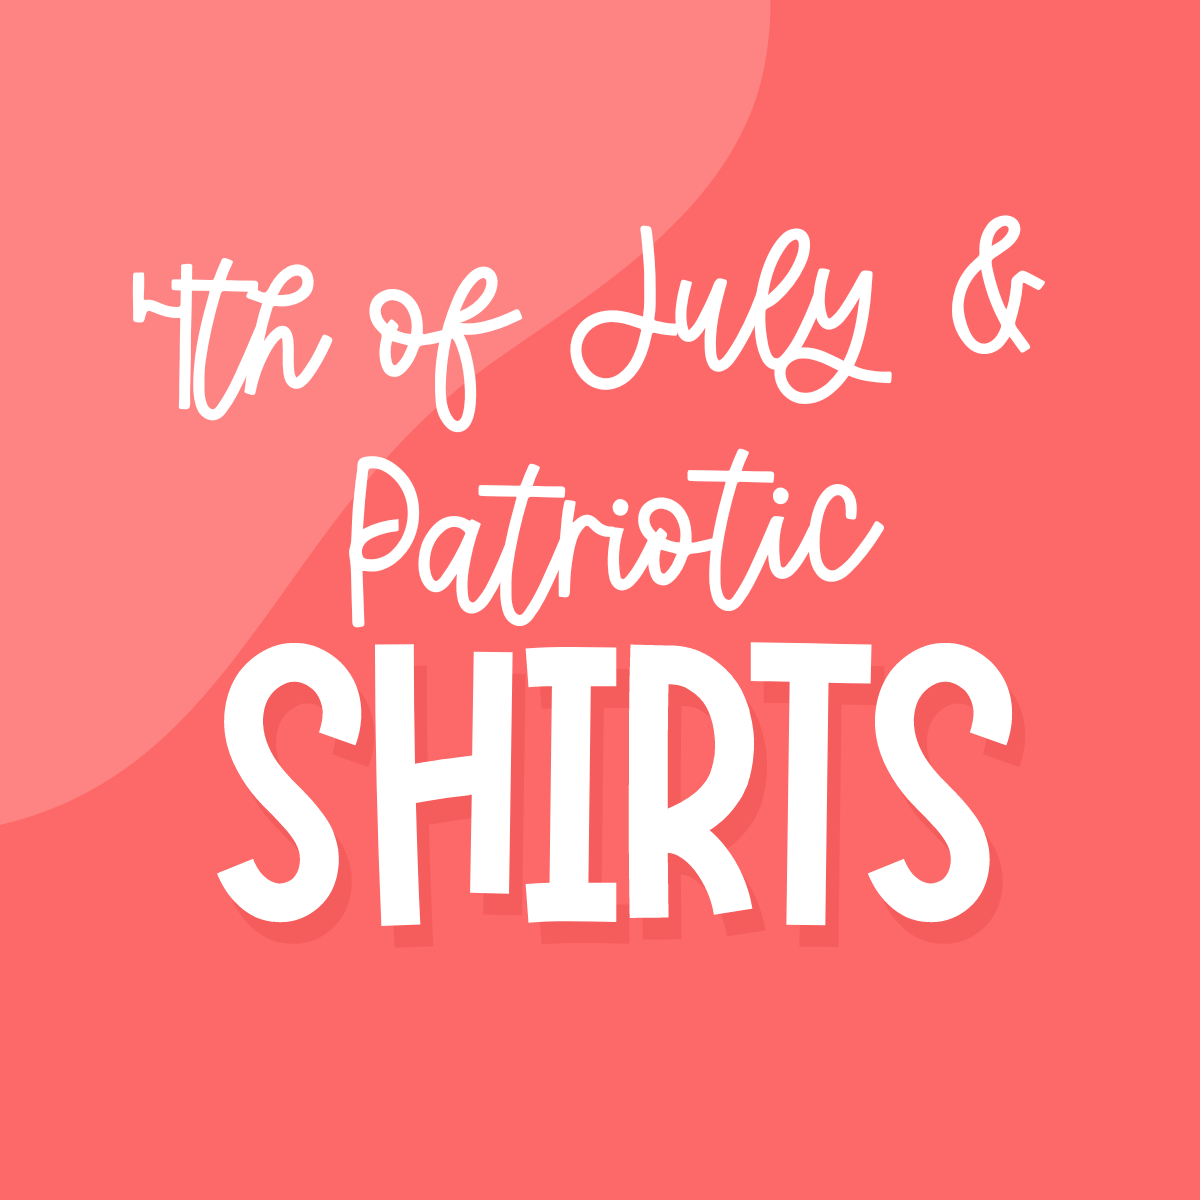 4th of July & Patriotic Shirts